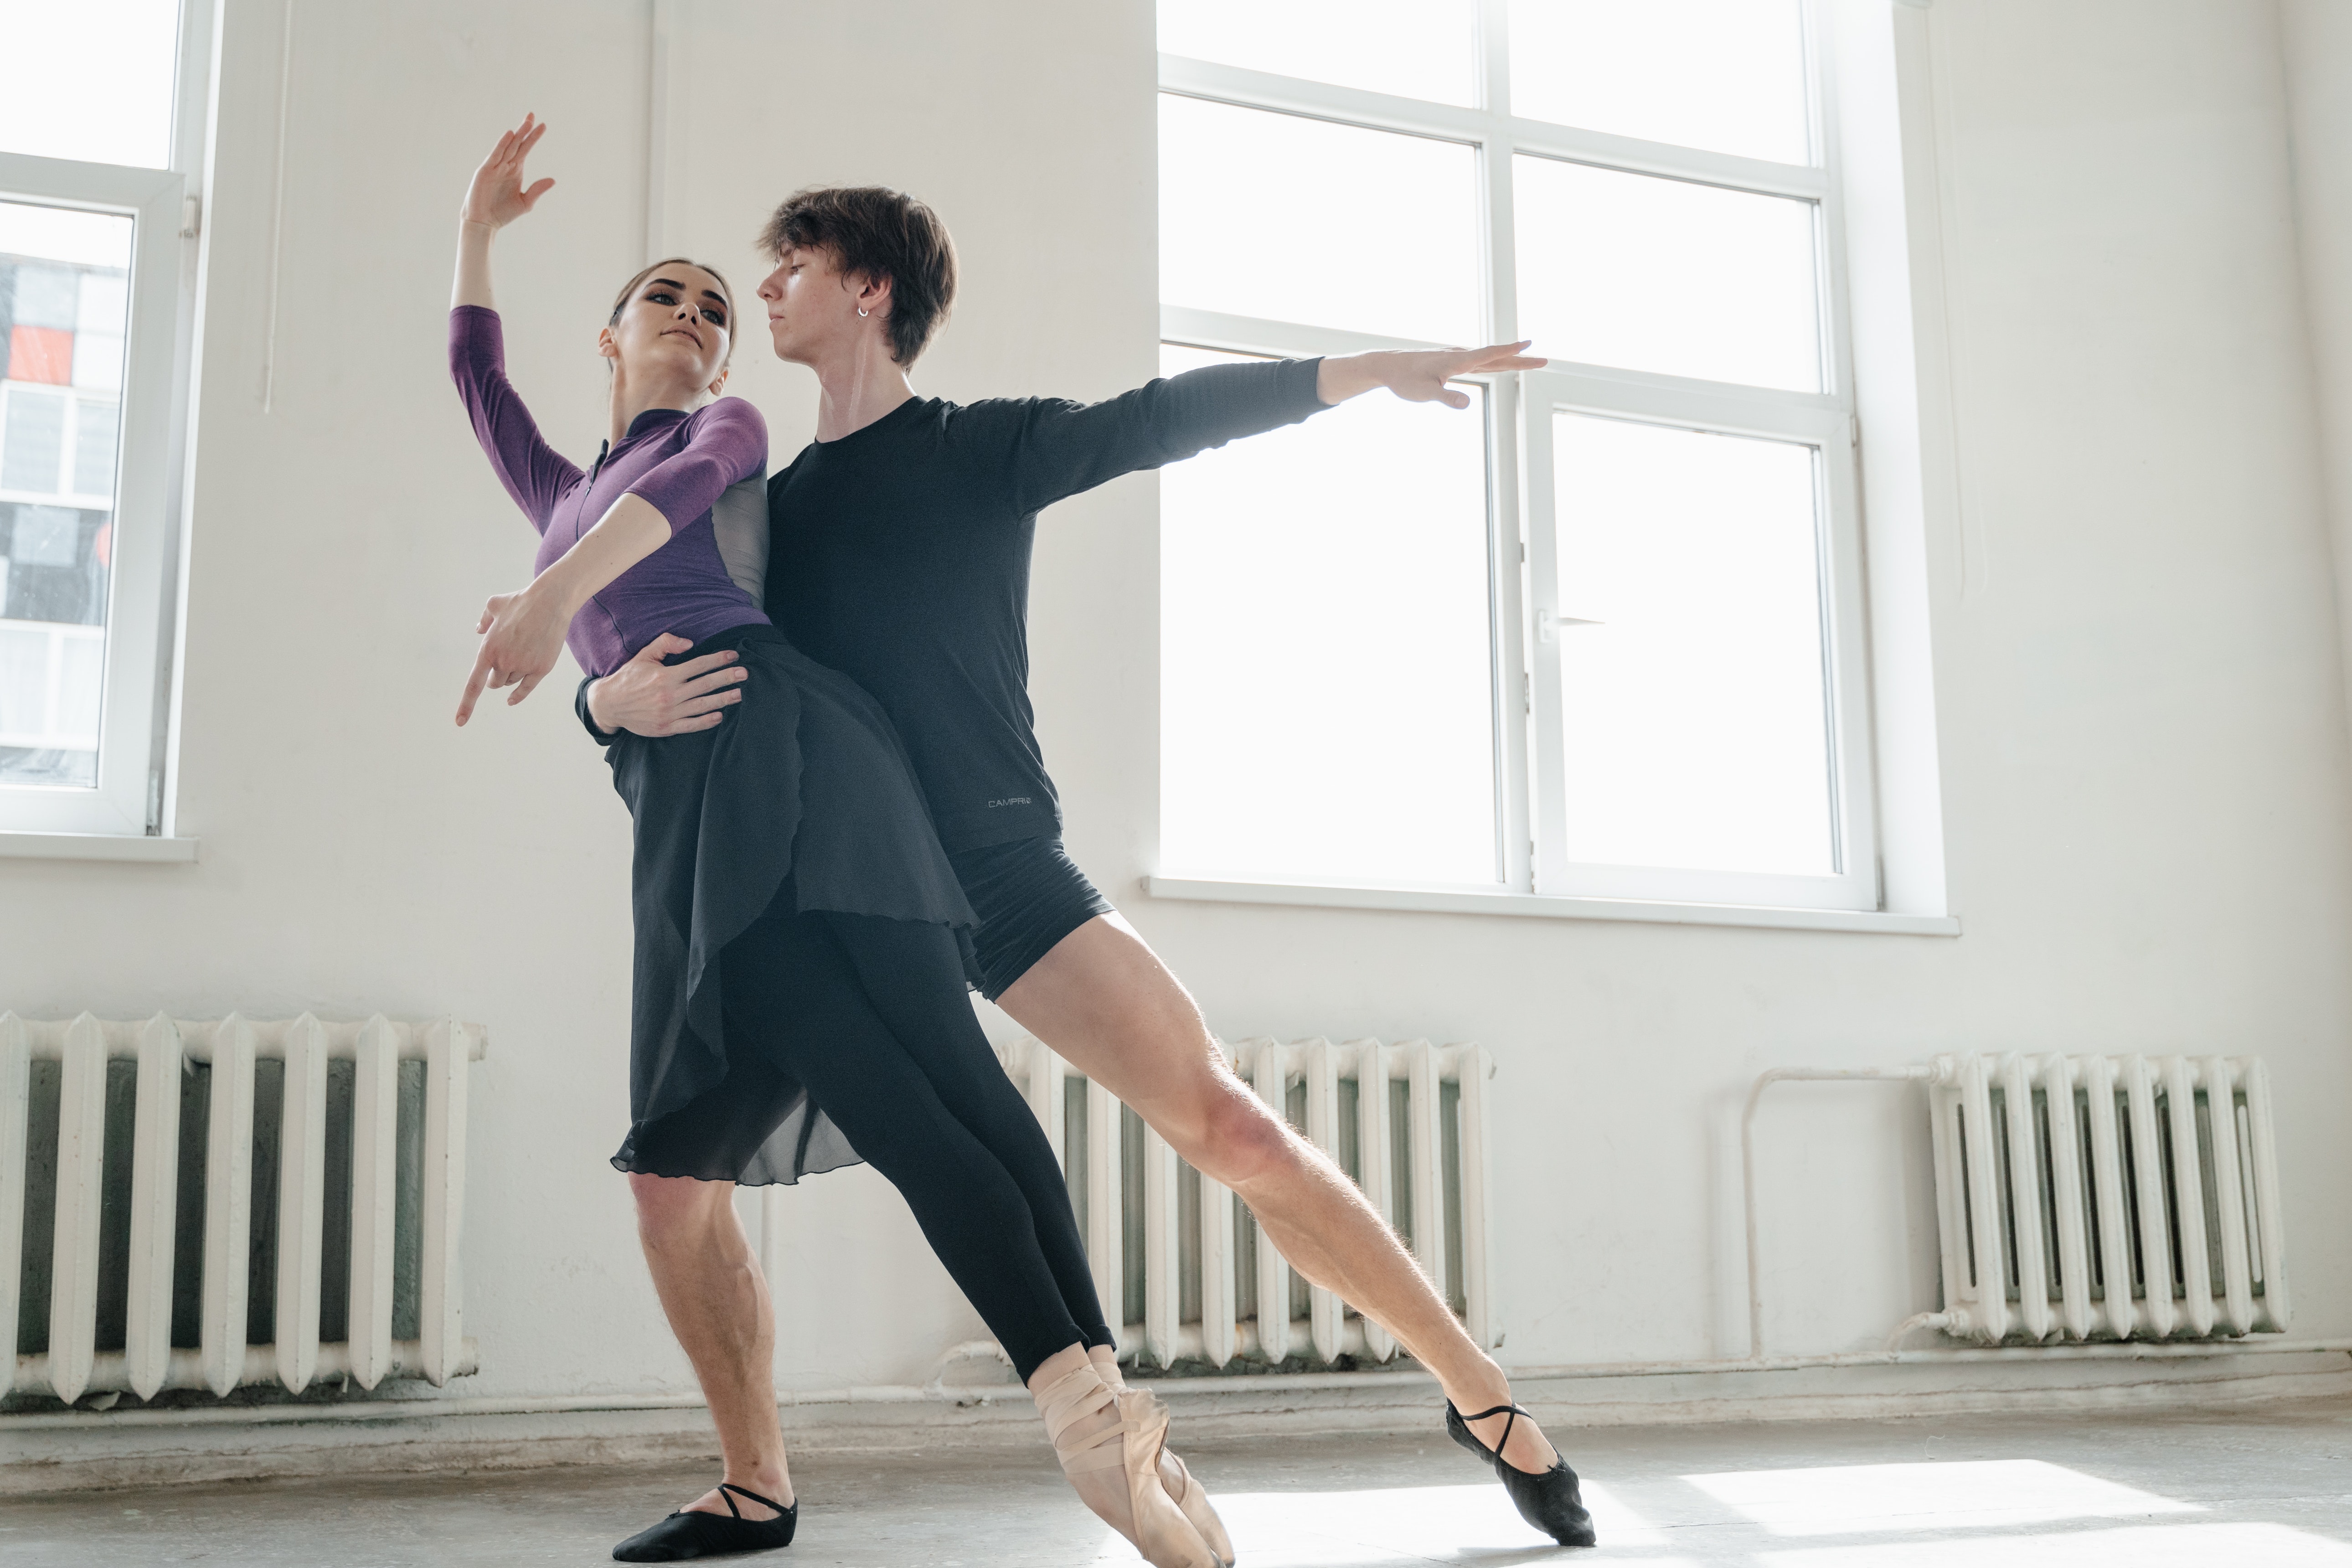 Learn New Steps at Dallas Dance Studios